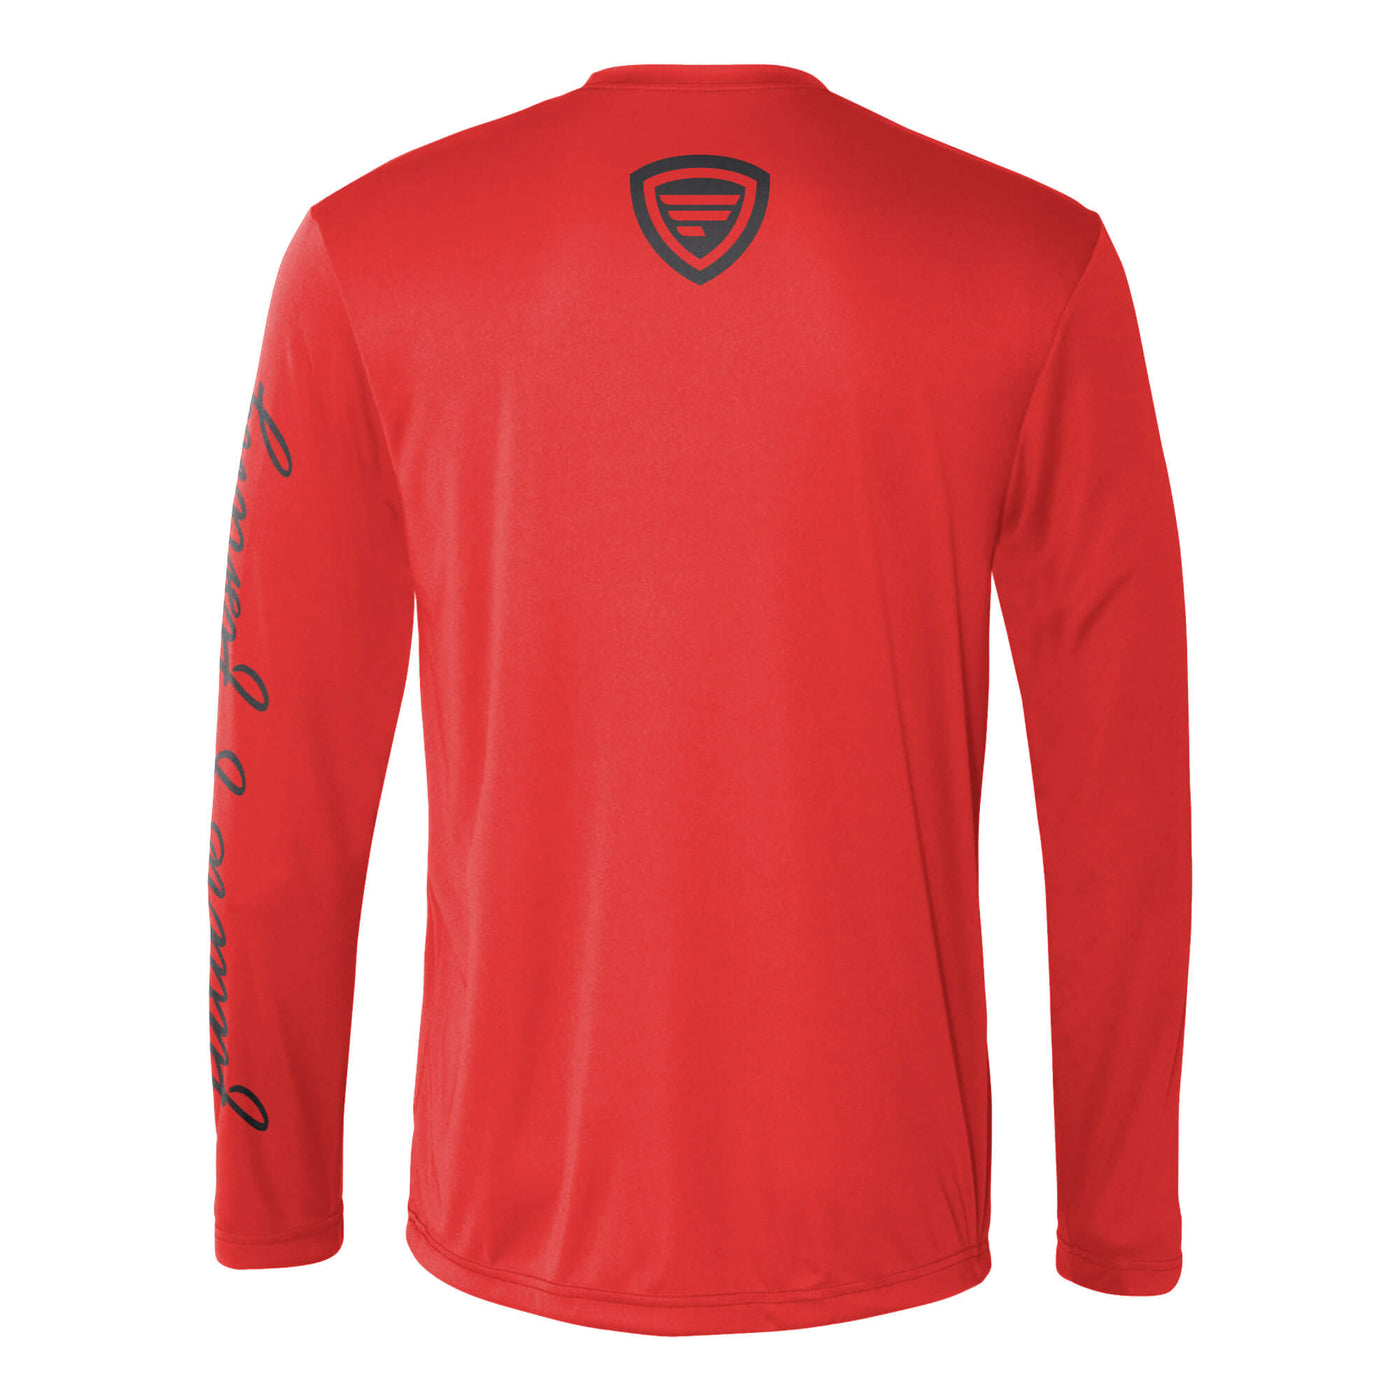 Major League Fishing No Limits Long-Sleeve T-Shirt for Men - Red - S